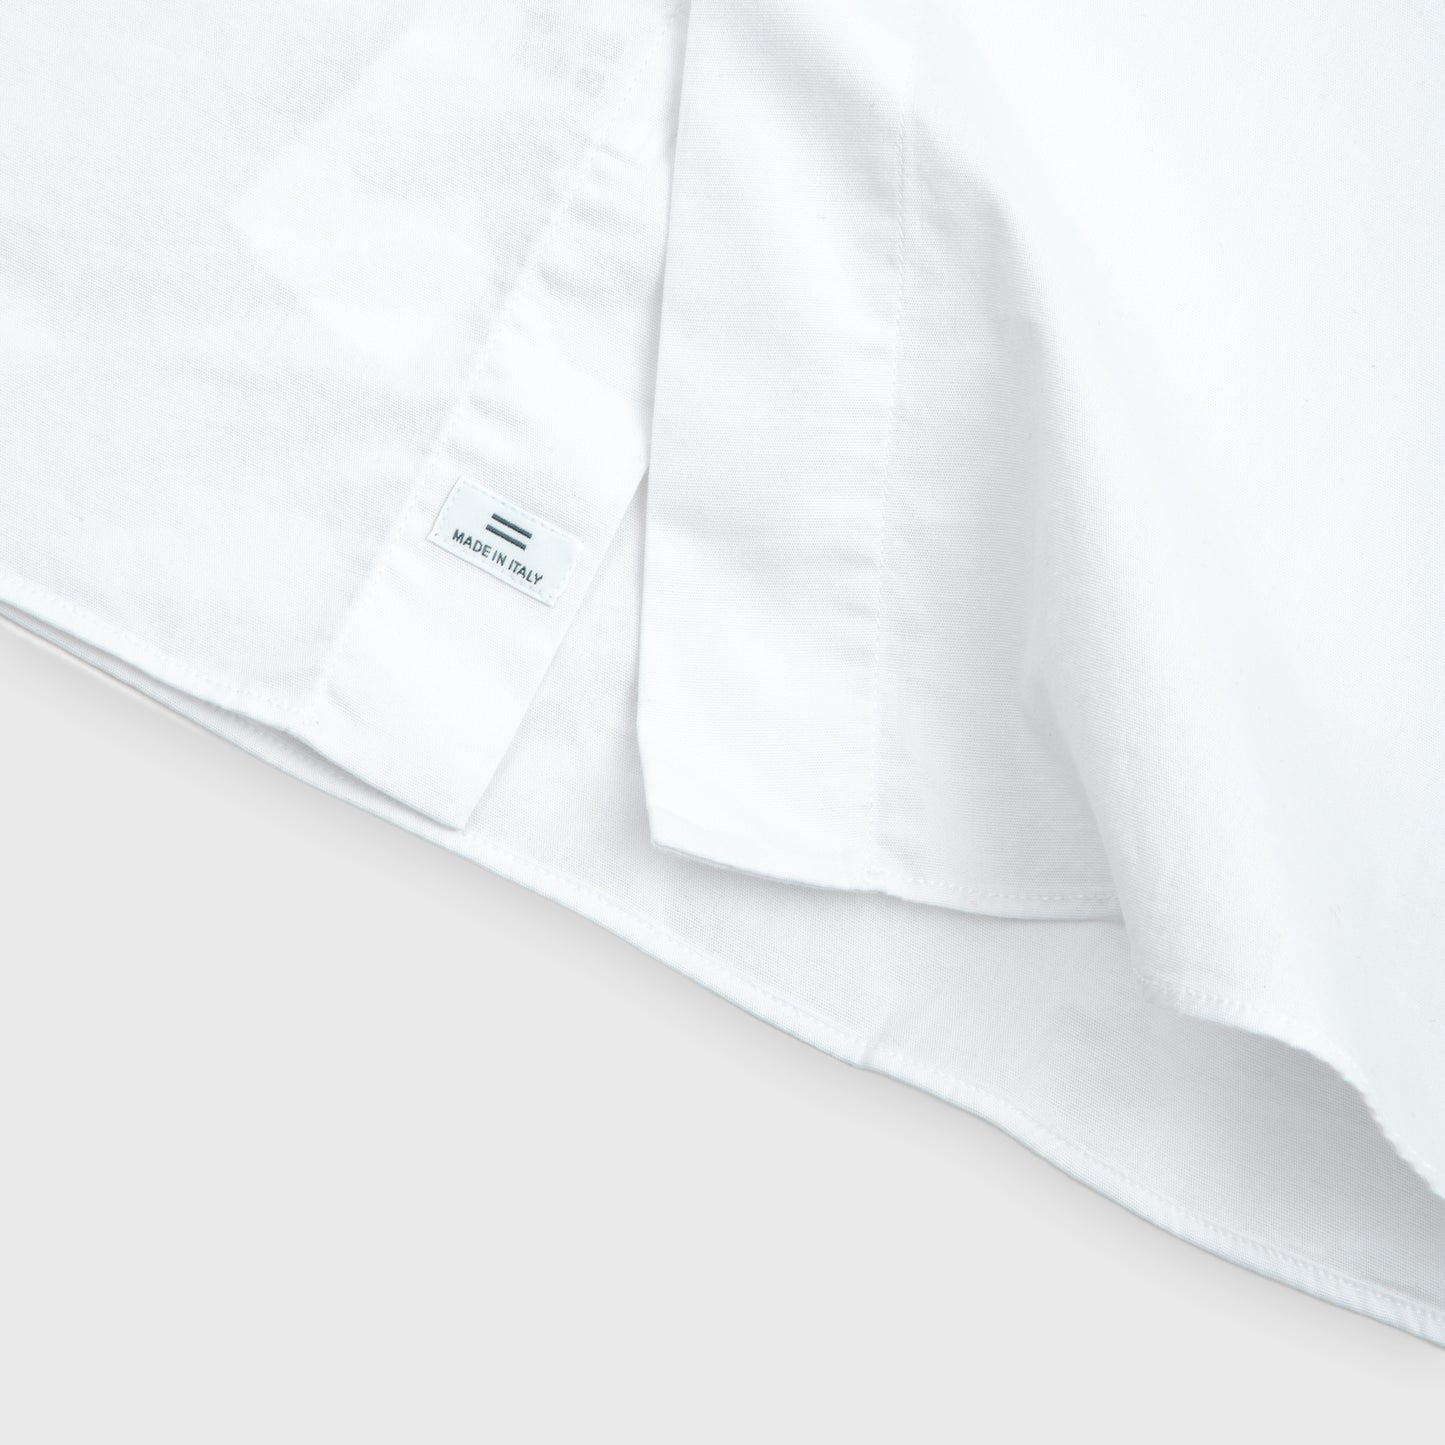 Two Pocket Army Cotton Shirt White